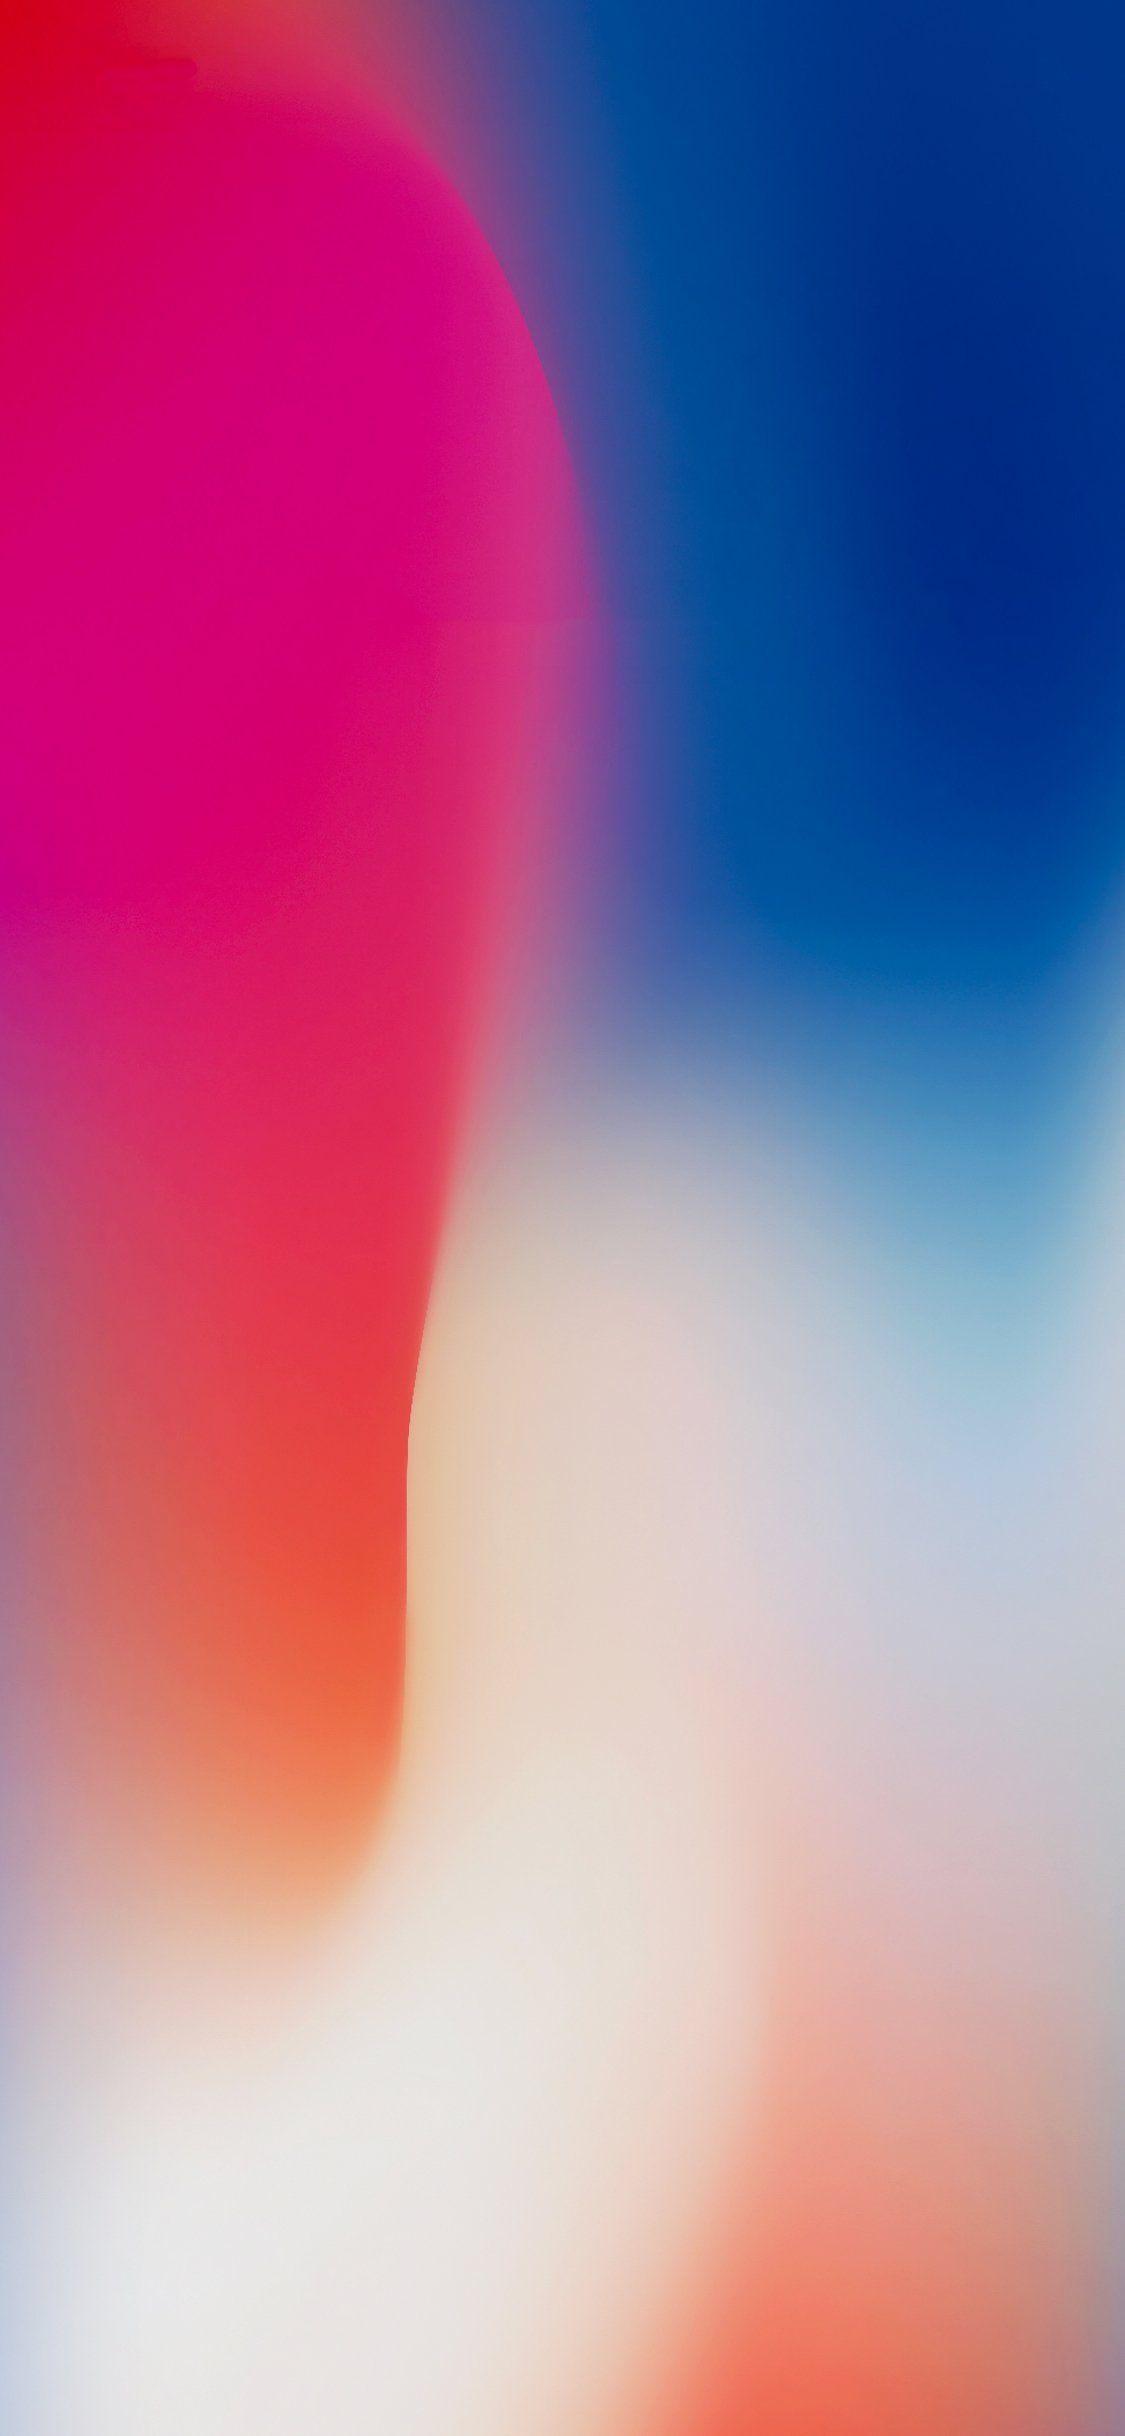 Apple iPhone Default Wallpapers - Top Những Hình Ảnh Đẹp